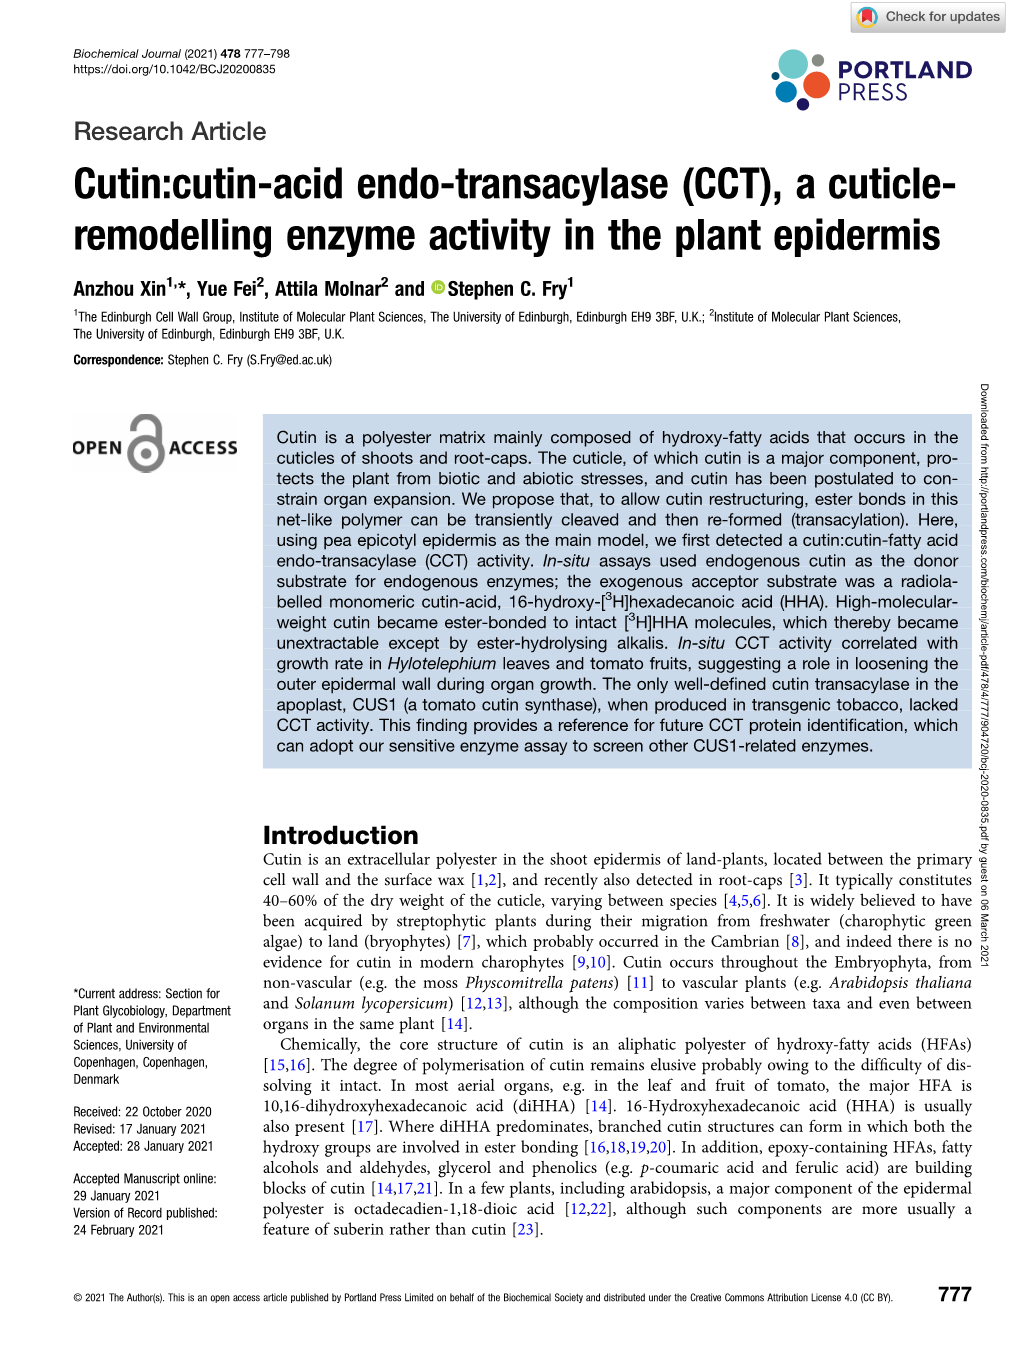 Cutin:Cutin-Acid Endo-Transacylase (CCT), a Cuticle- Remodelling Enzyme Activity in the Plant Epidermis